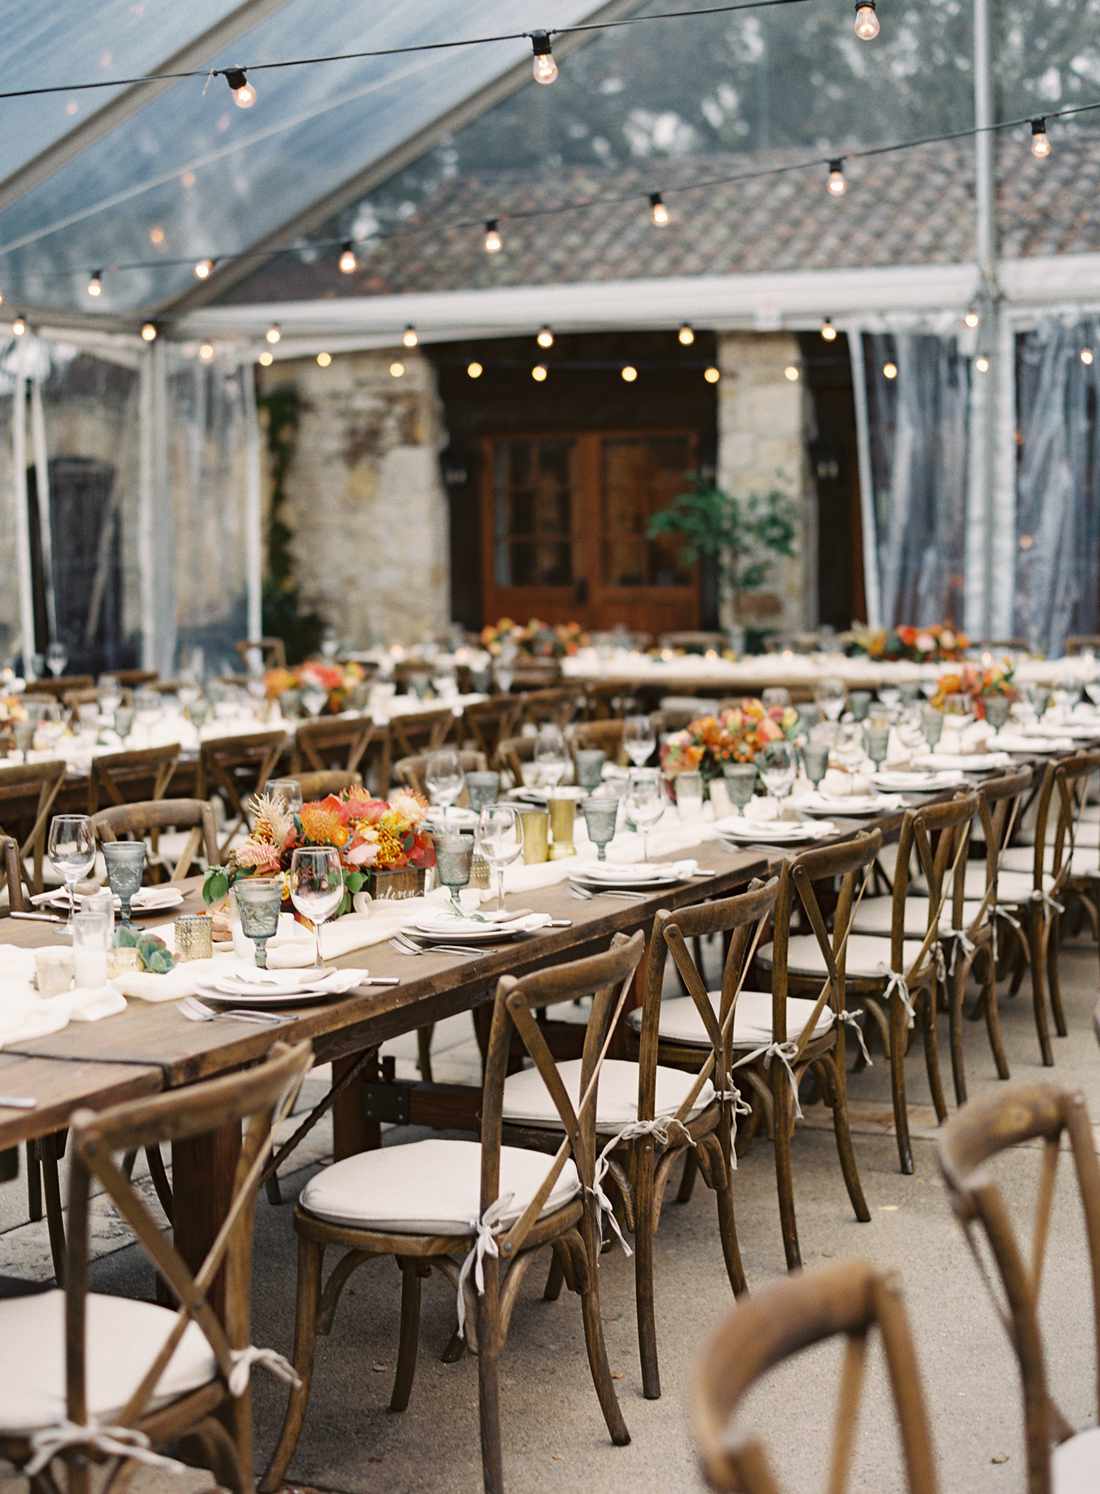 Rose Patio long wooden tables wedding reception